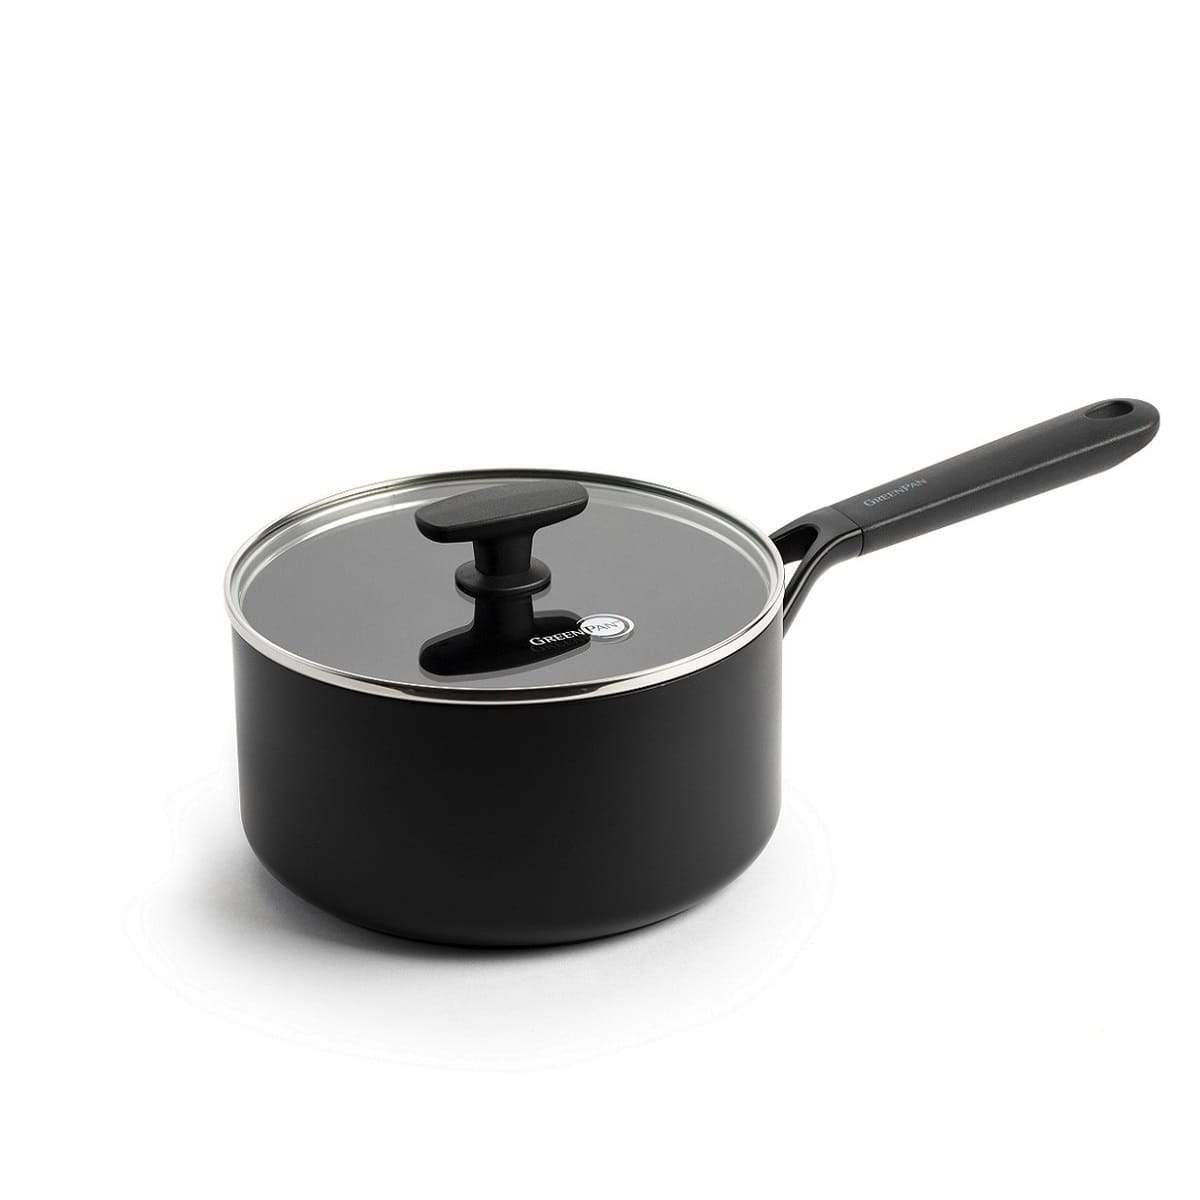 CC003958-001 - Smart Shape Saucepan with Lid, Black - 20cm - Product Image 1